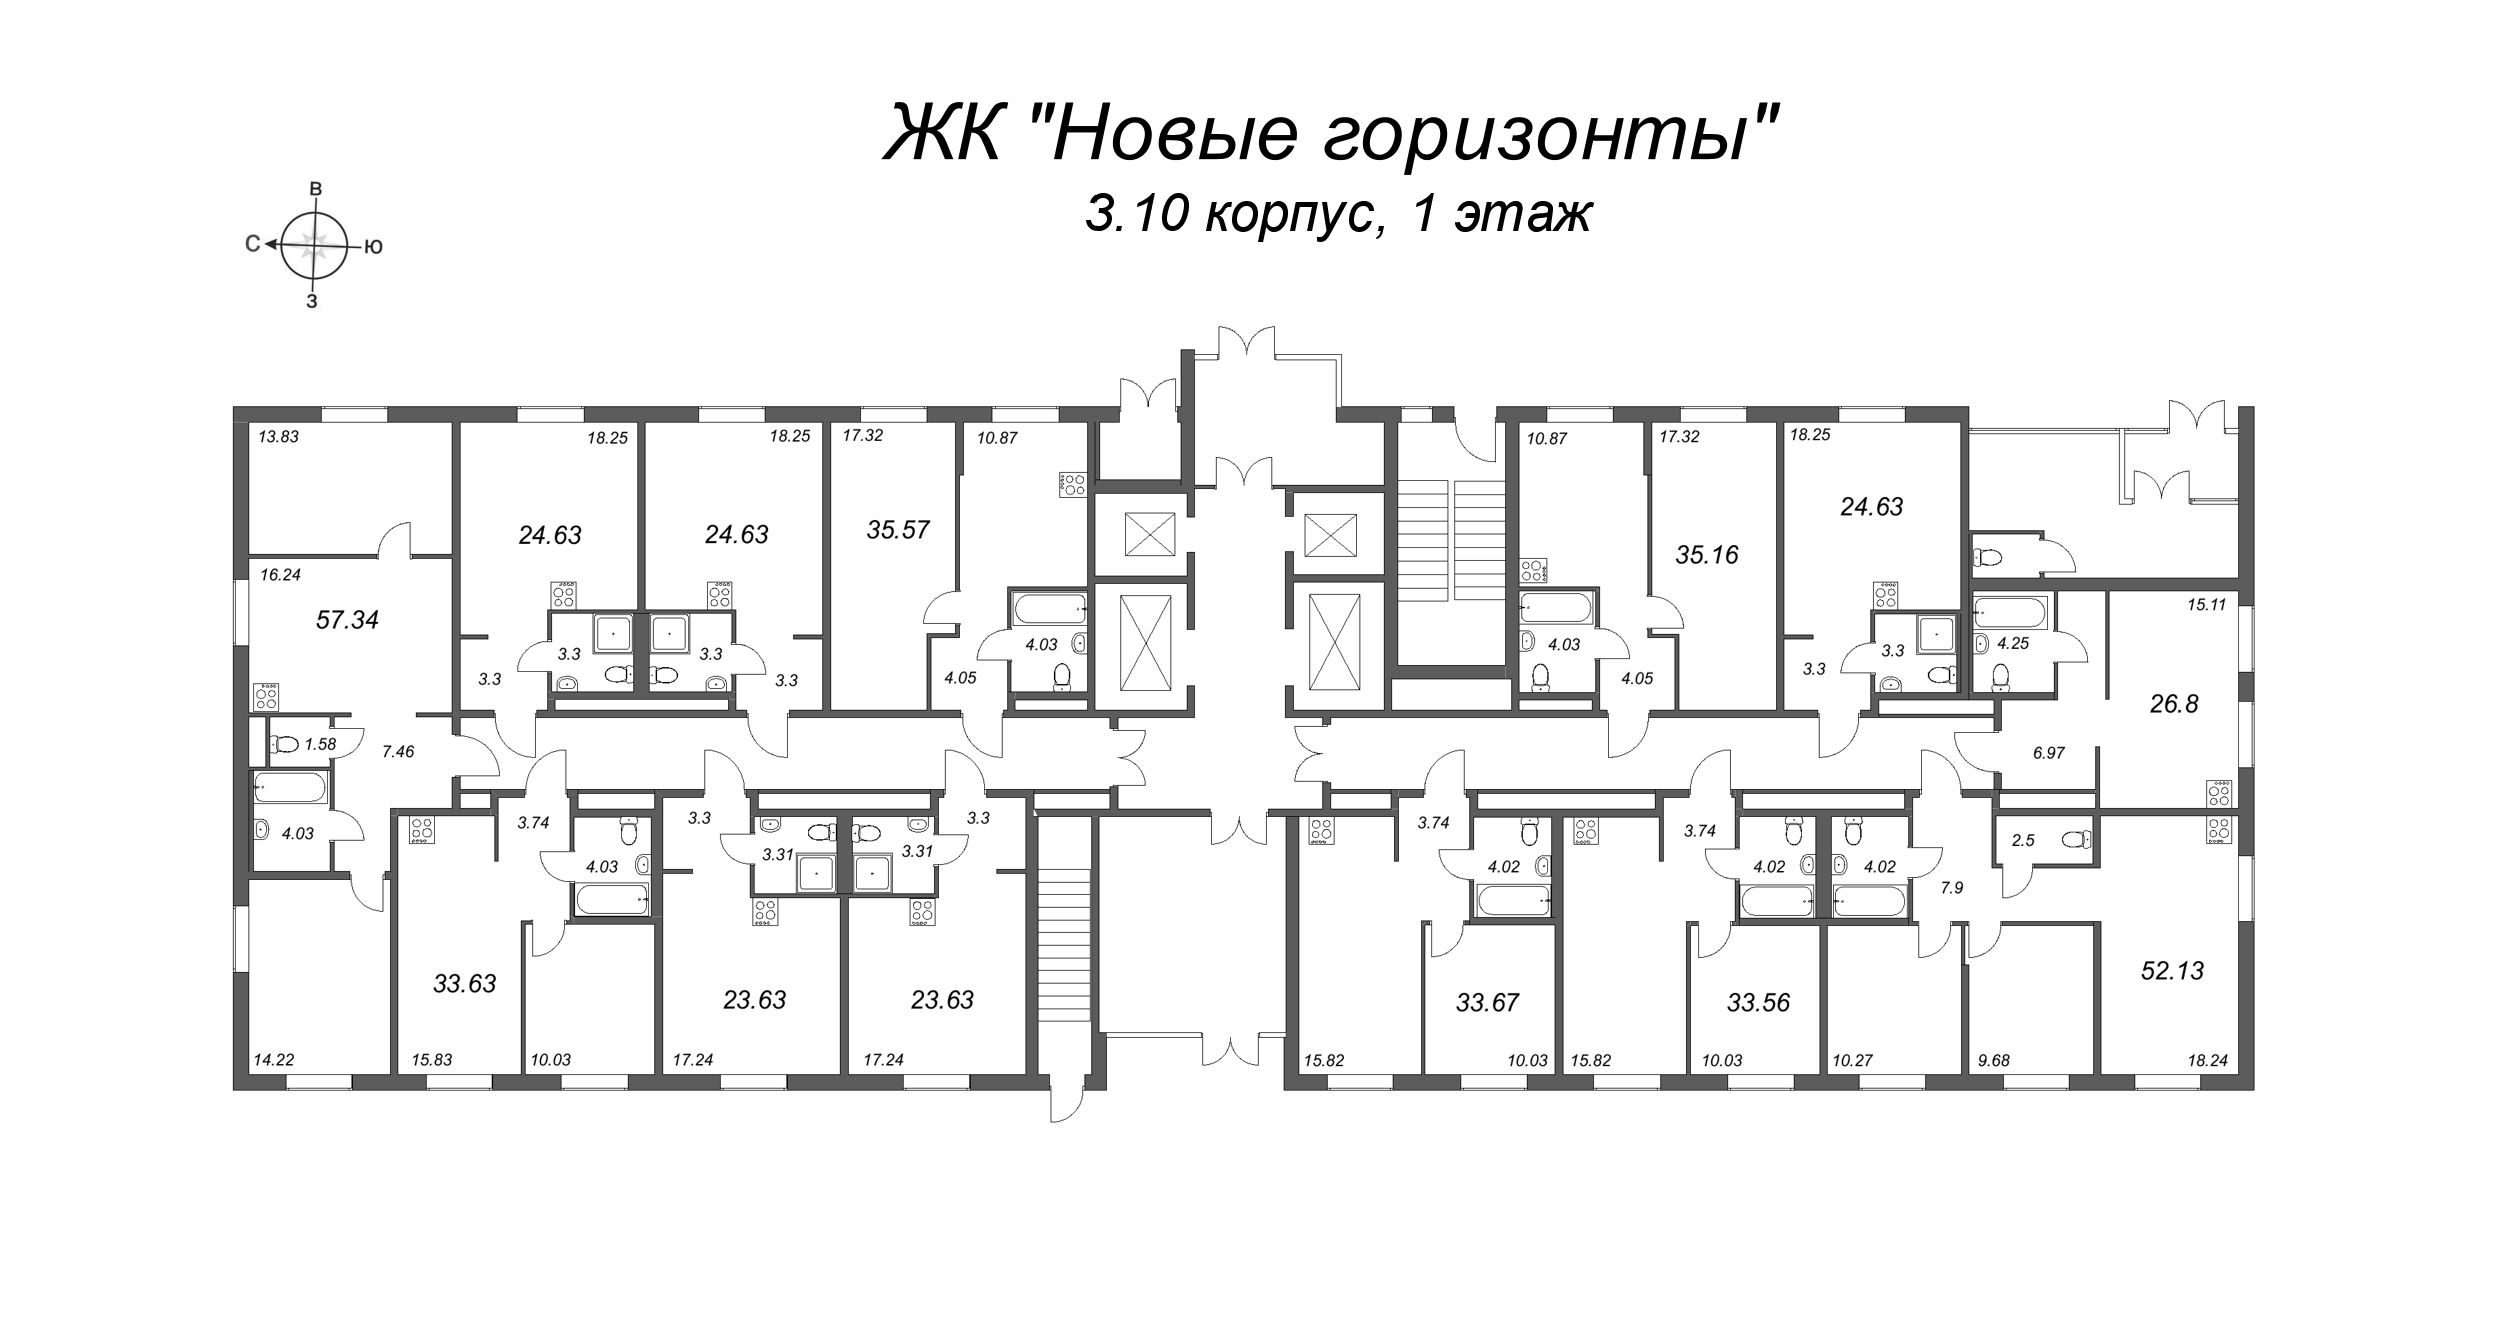 3-комнатная (Евро) квартира, 57.34 м² - планировка этажа